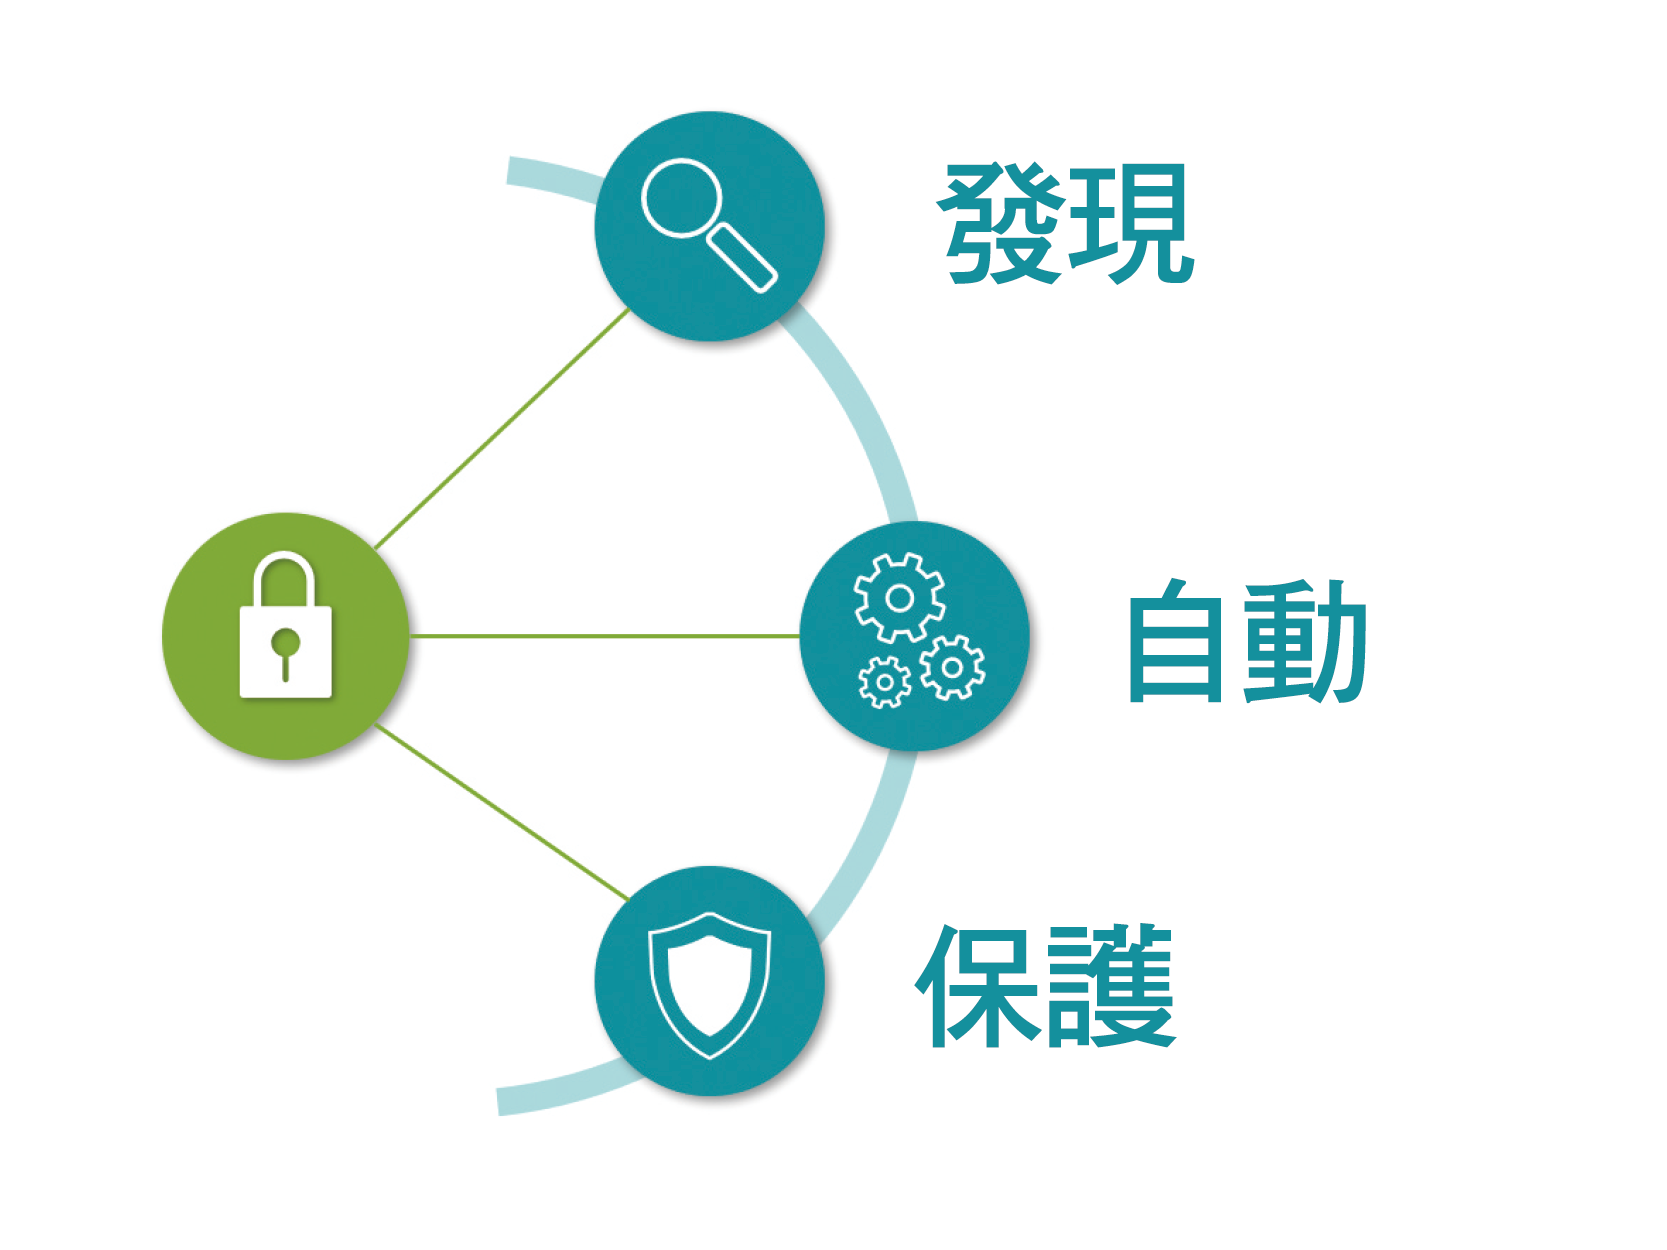 Juniper Connected Security 以發現、自動和保護作核心，橫跨旗下各網絡產品。